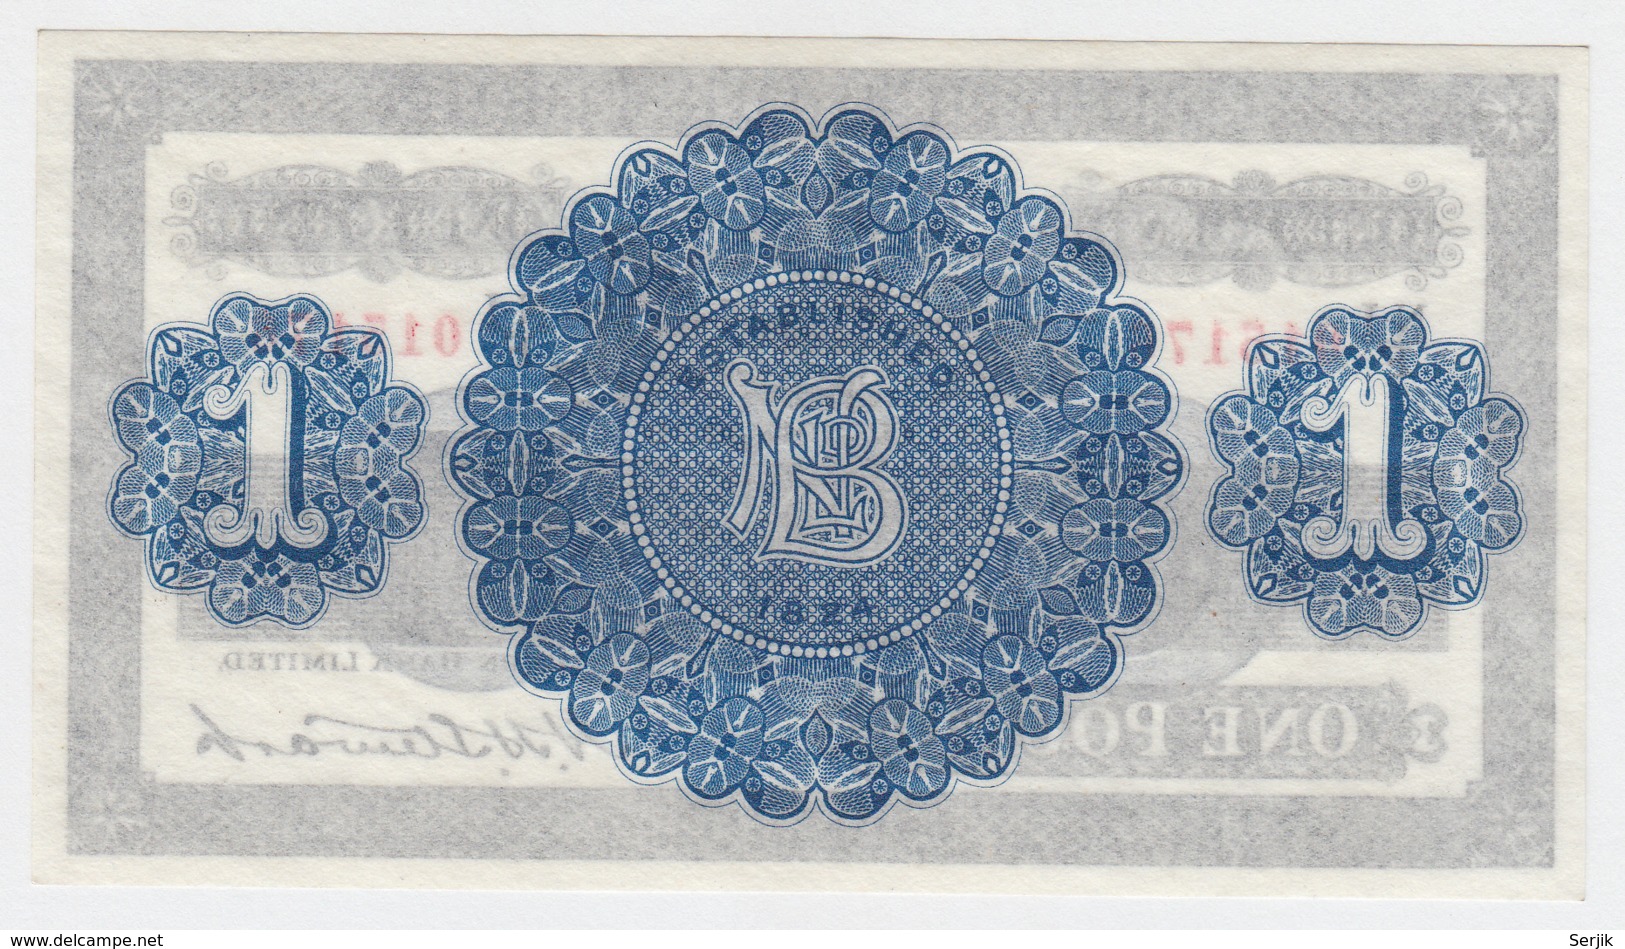 Northern Ireland 1 Pound 1929 UNC NEUF Pick 178a - 1 Pound